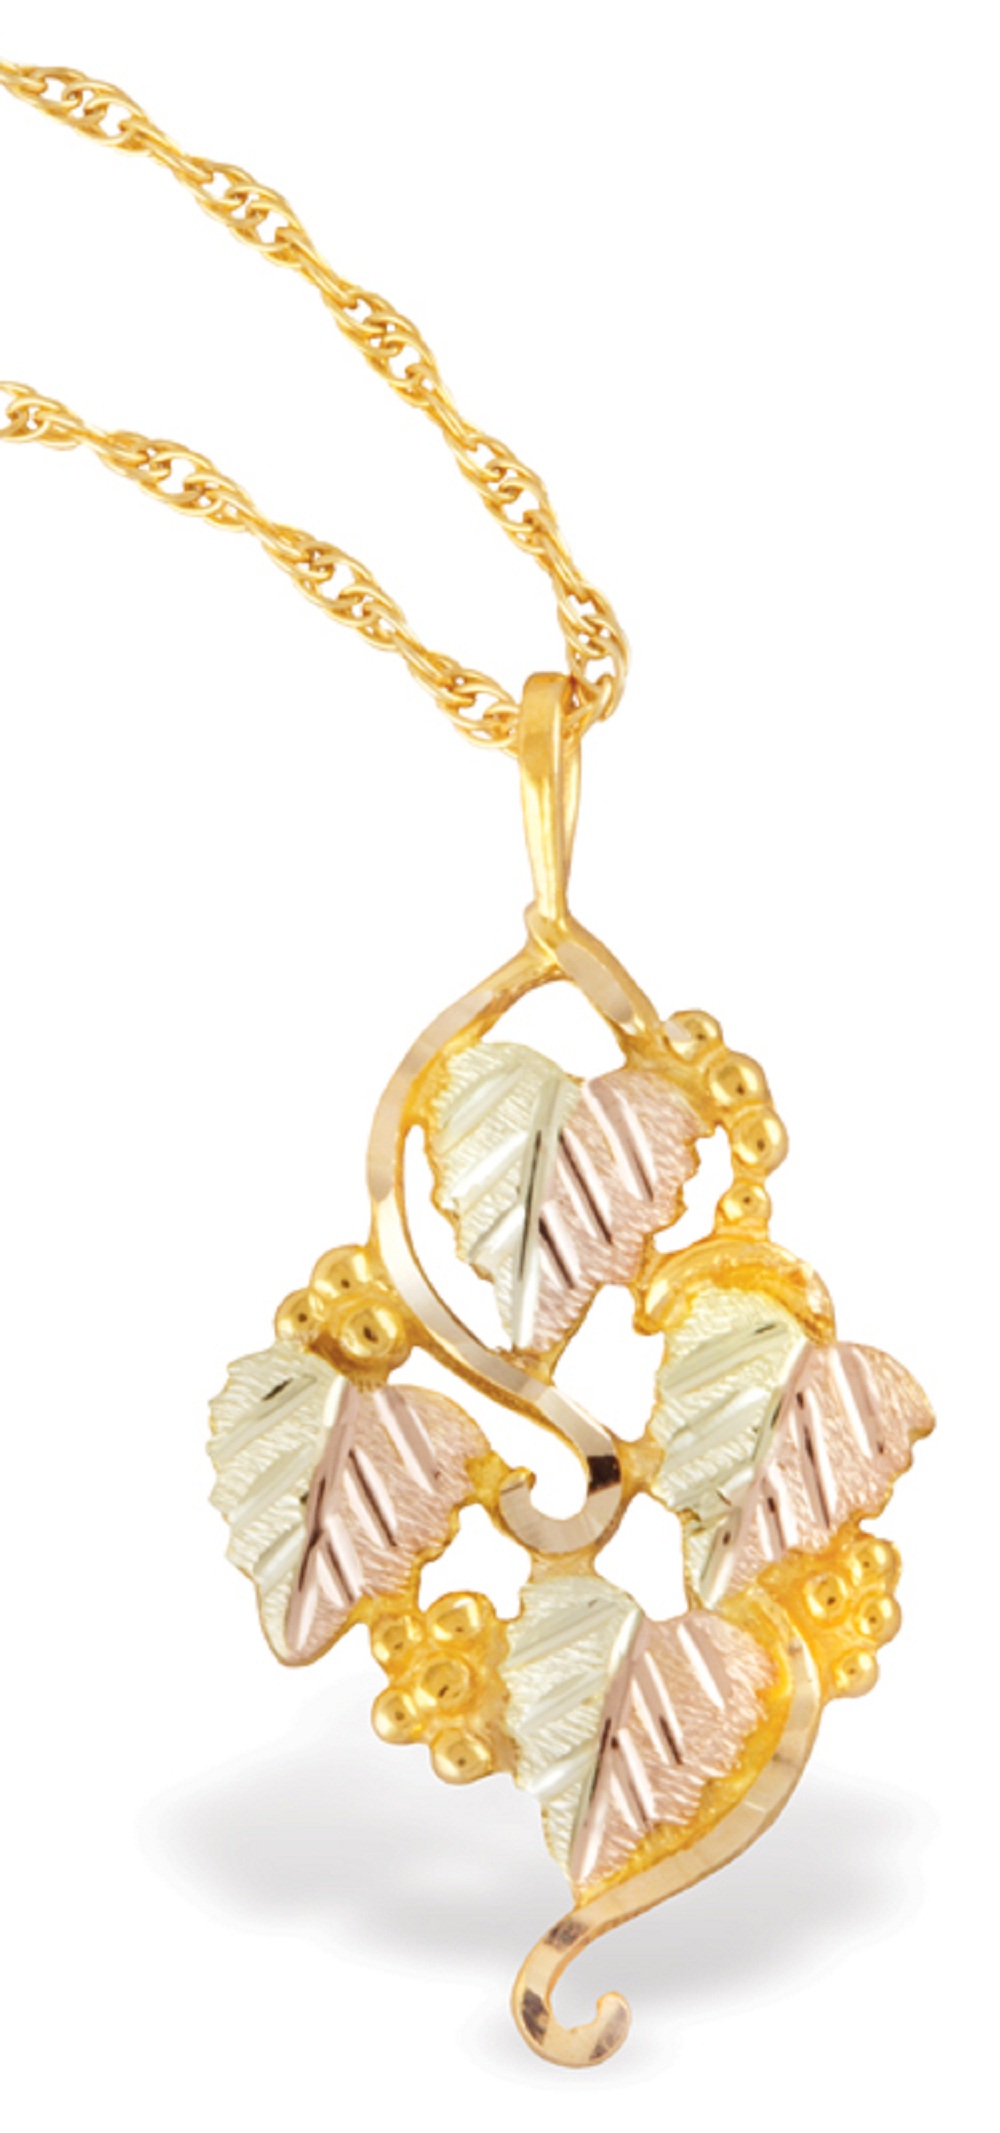 Black Hills Gold Necklace with Grape Leaf Cluster Pendant. 